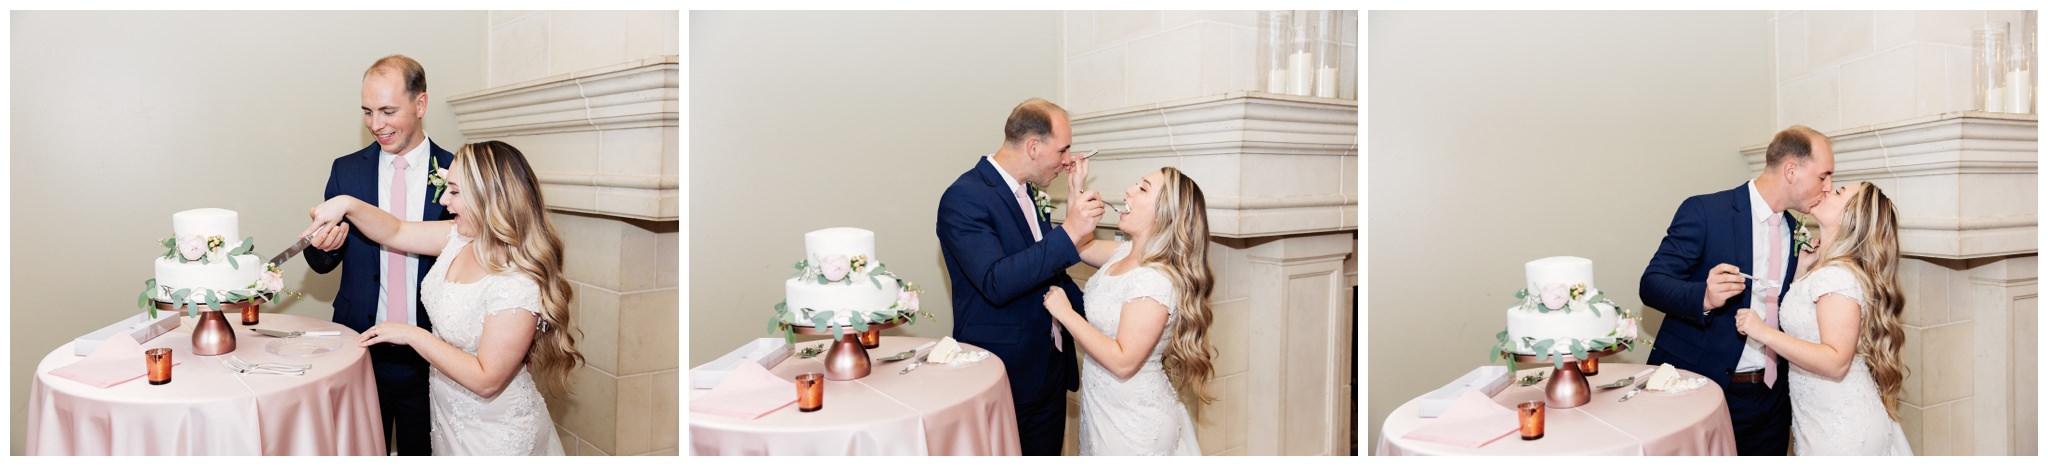 Bride and Groom cutting the cake | Garden Room | Sleepy Ridge Wedding